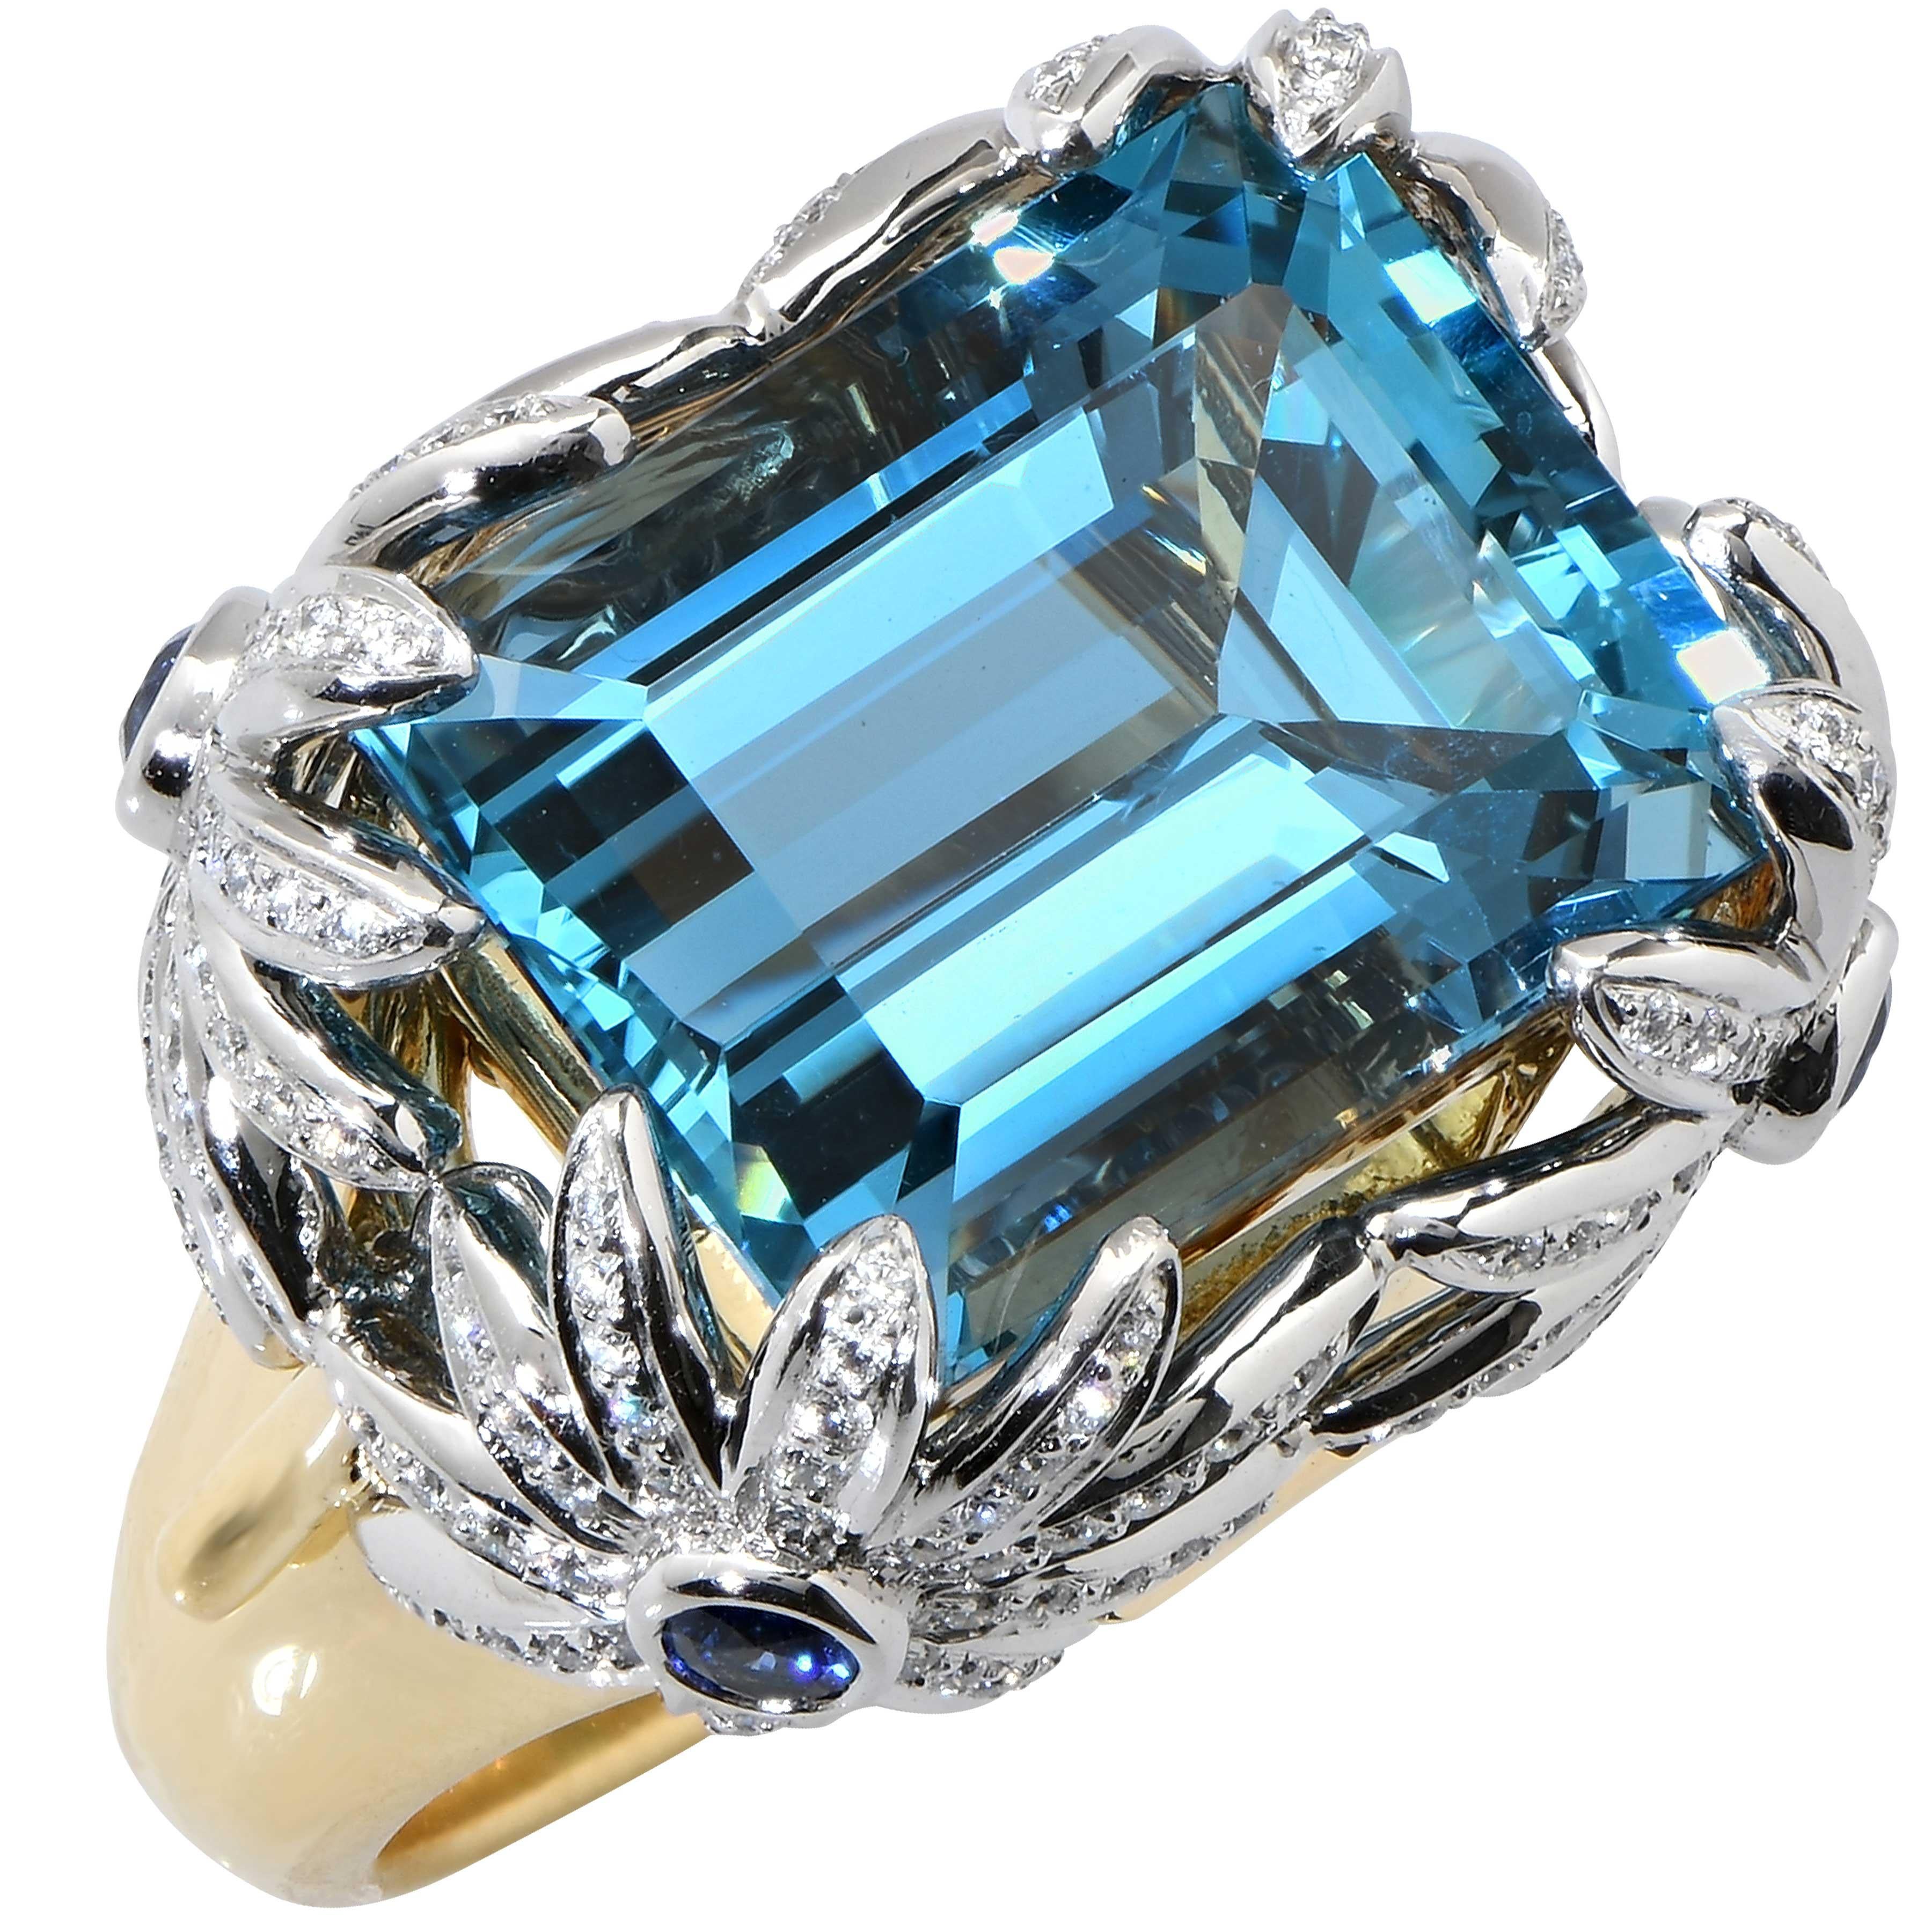 Baroque Revival Tiffany & Co. Schlumberger Daisy Aquamarine and Diamond Ring